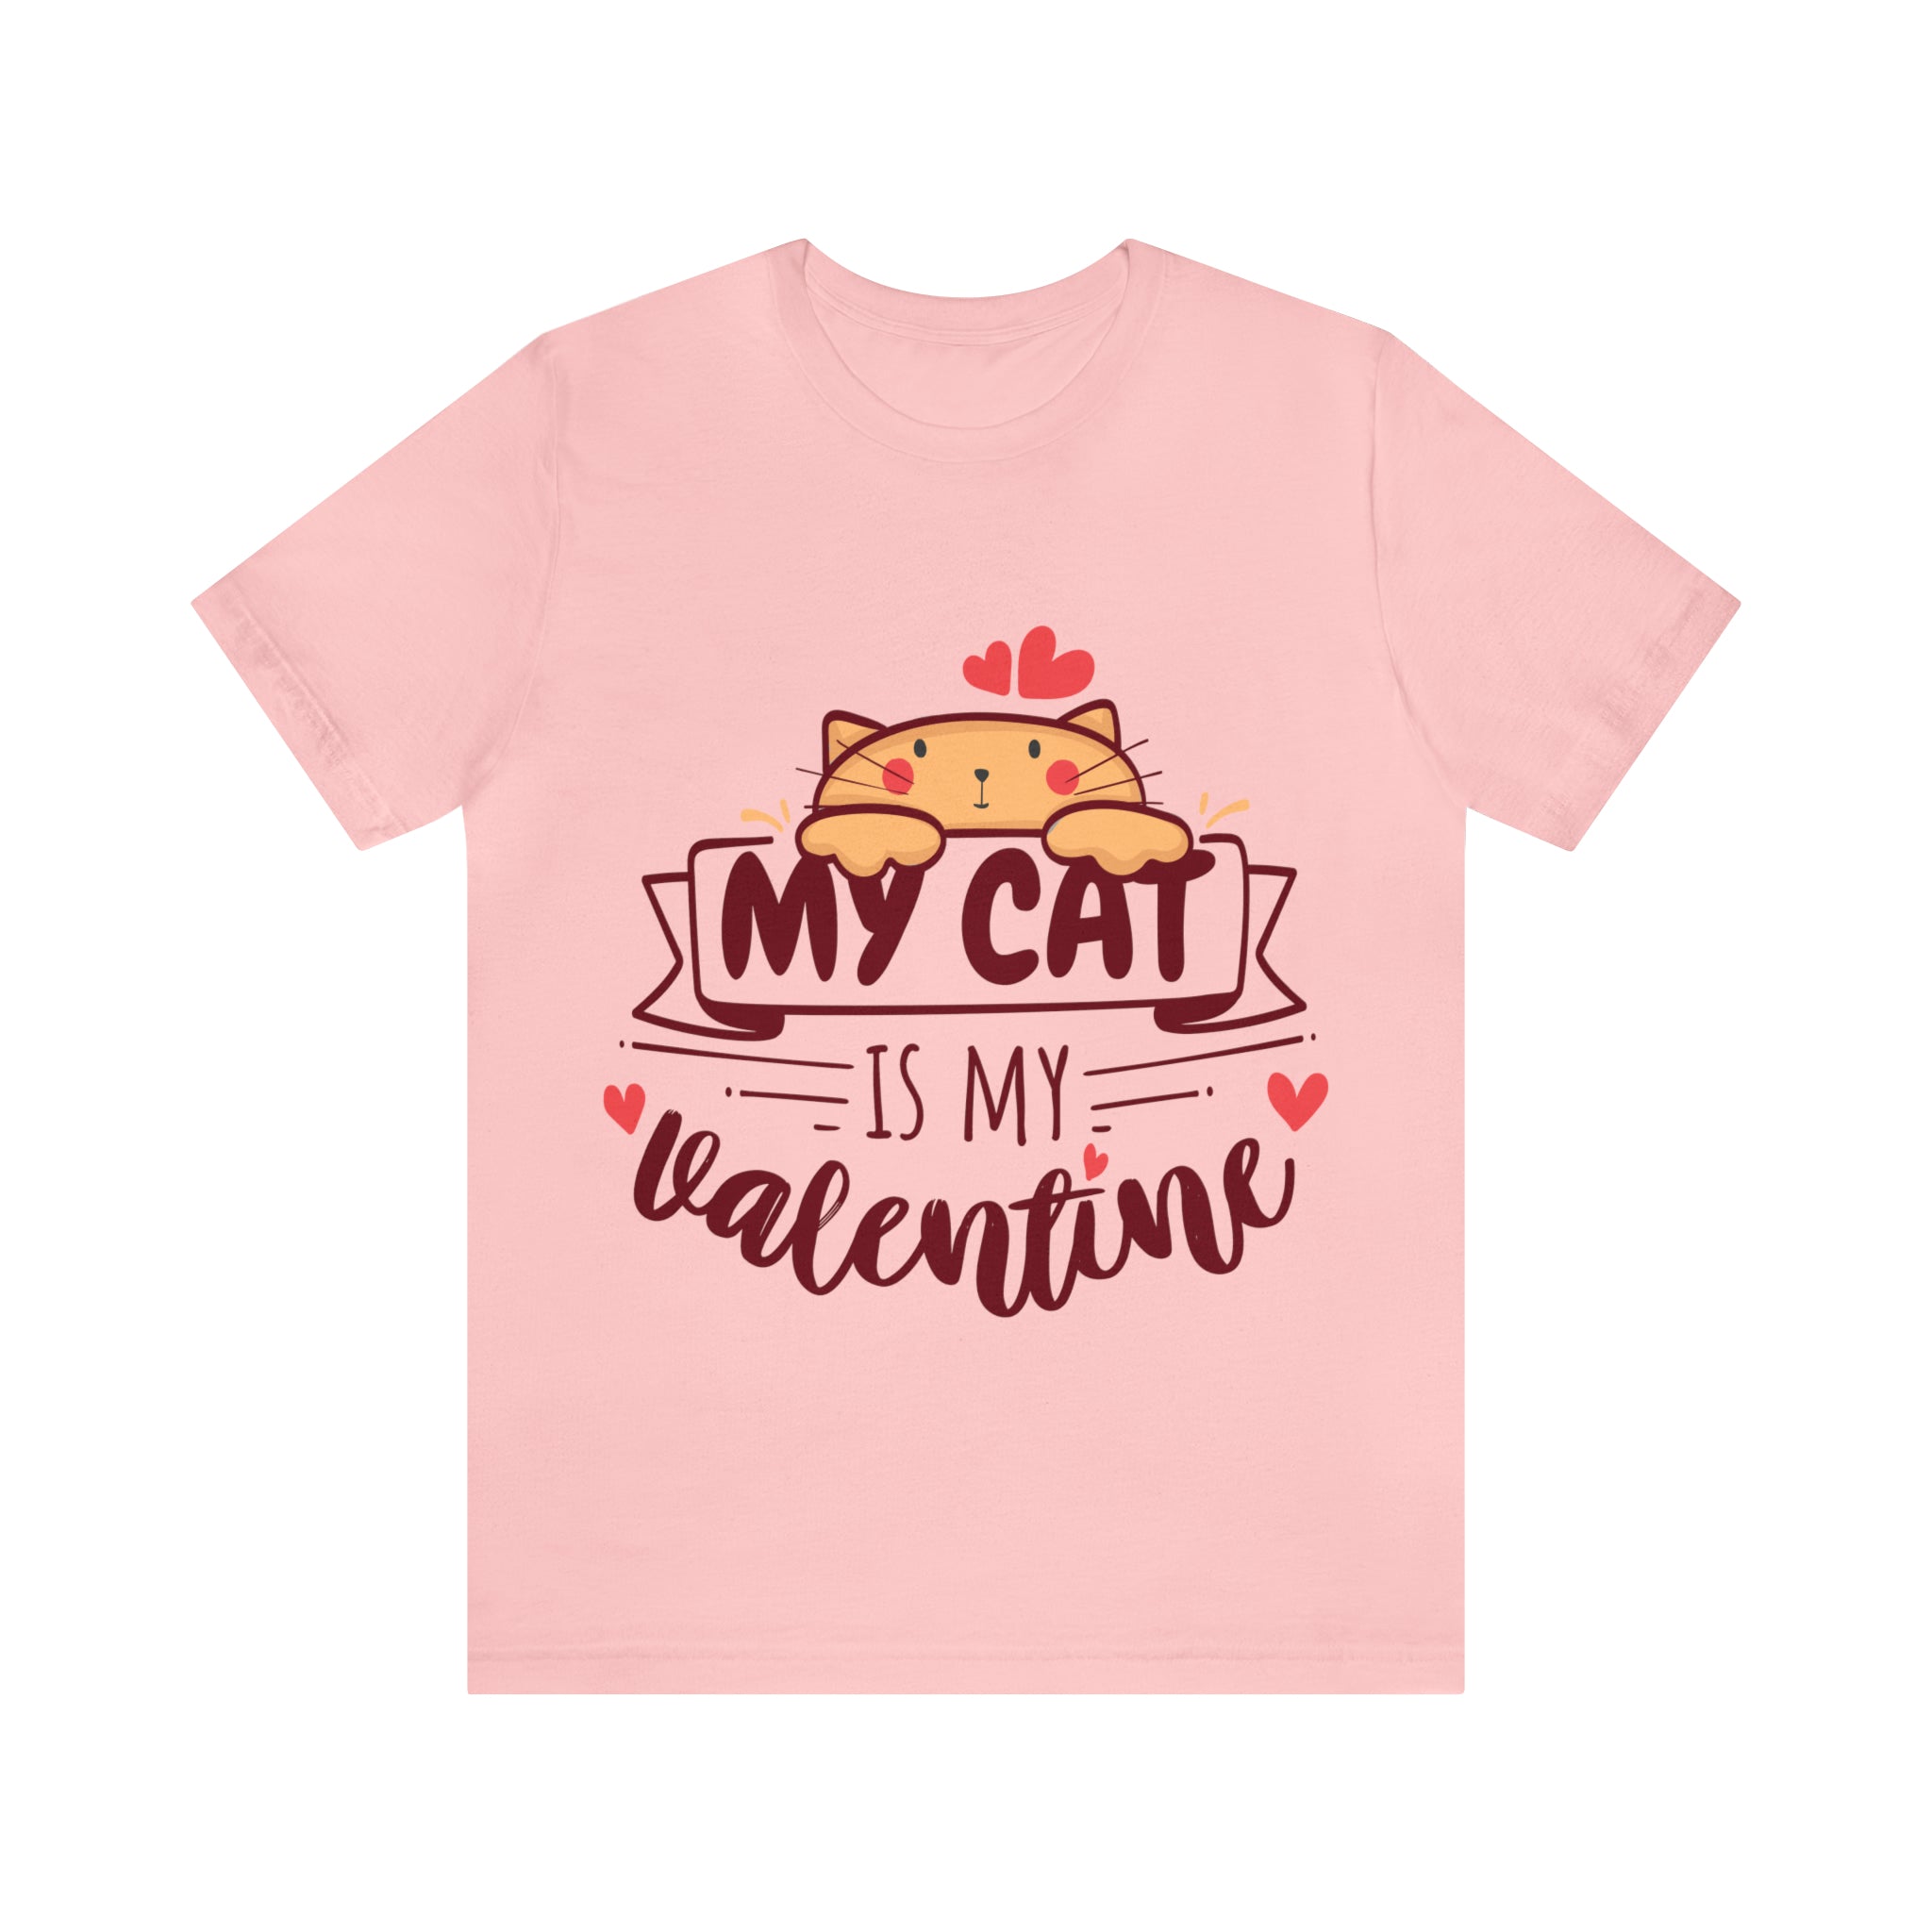 My Cat is my Valentine t-shirt - pink